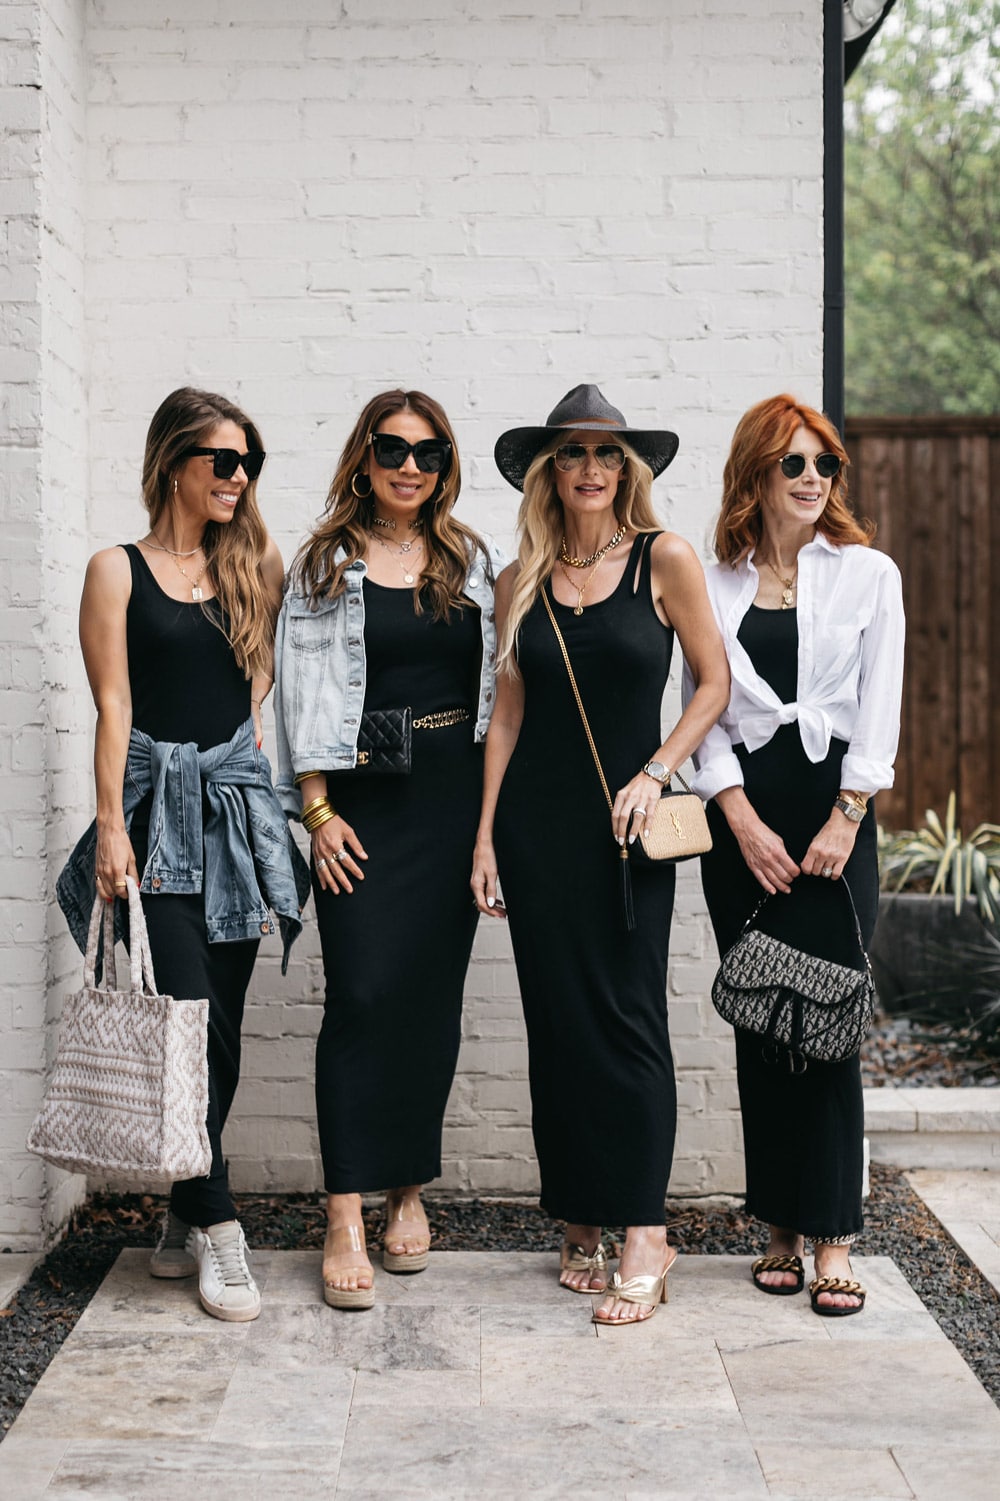 Dallas fashion bloggers wearing black dresses and accessories